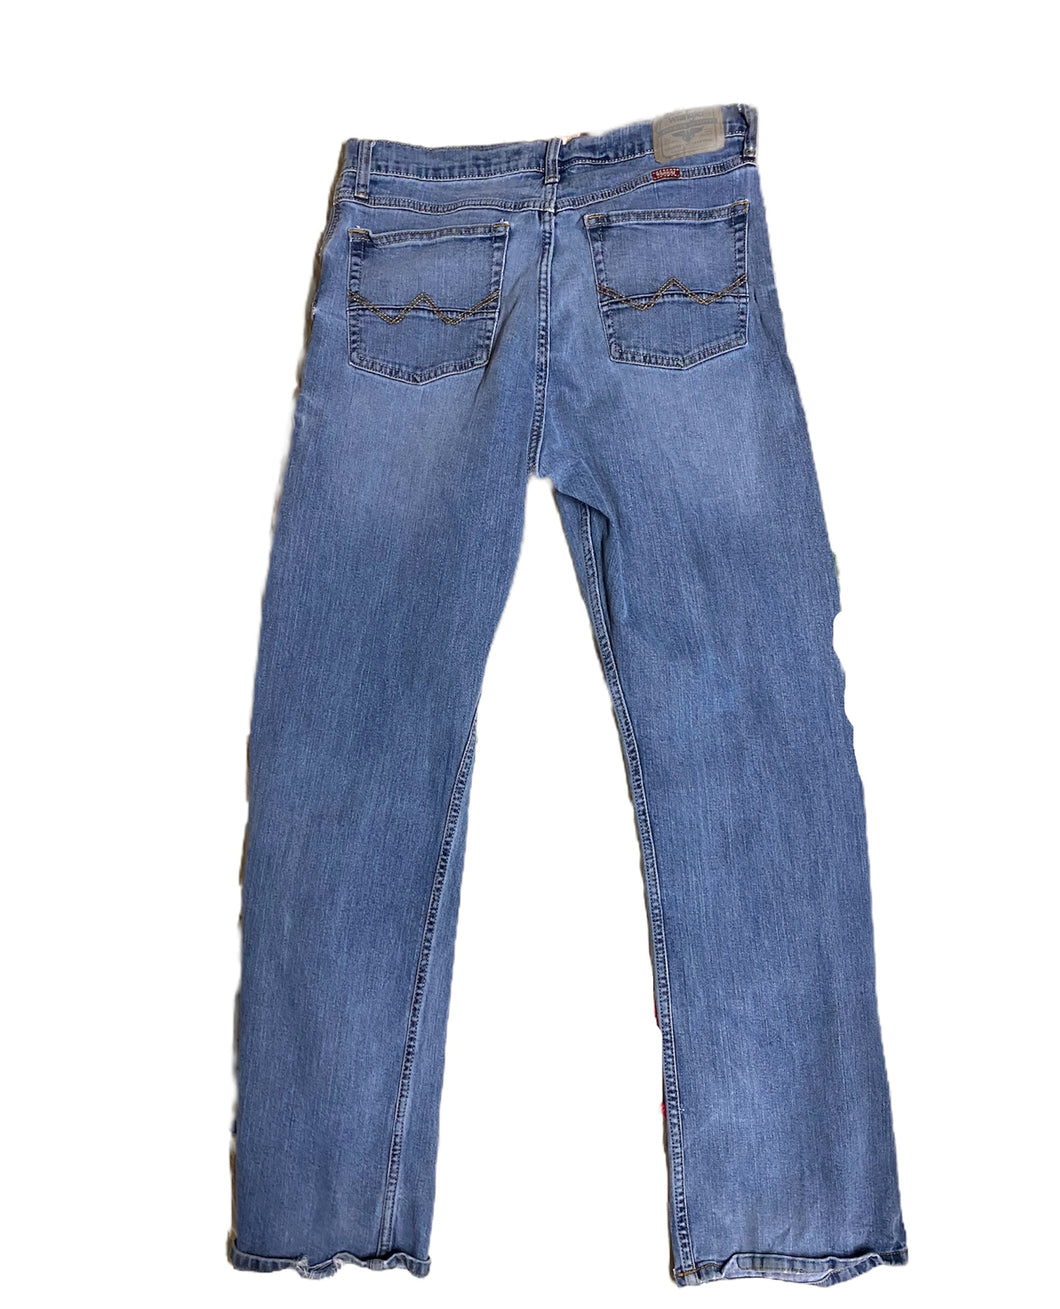 Mens Wrangler jeans Sz 32 x30